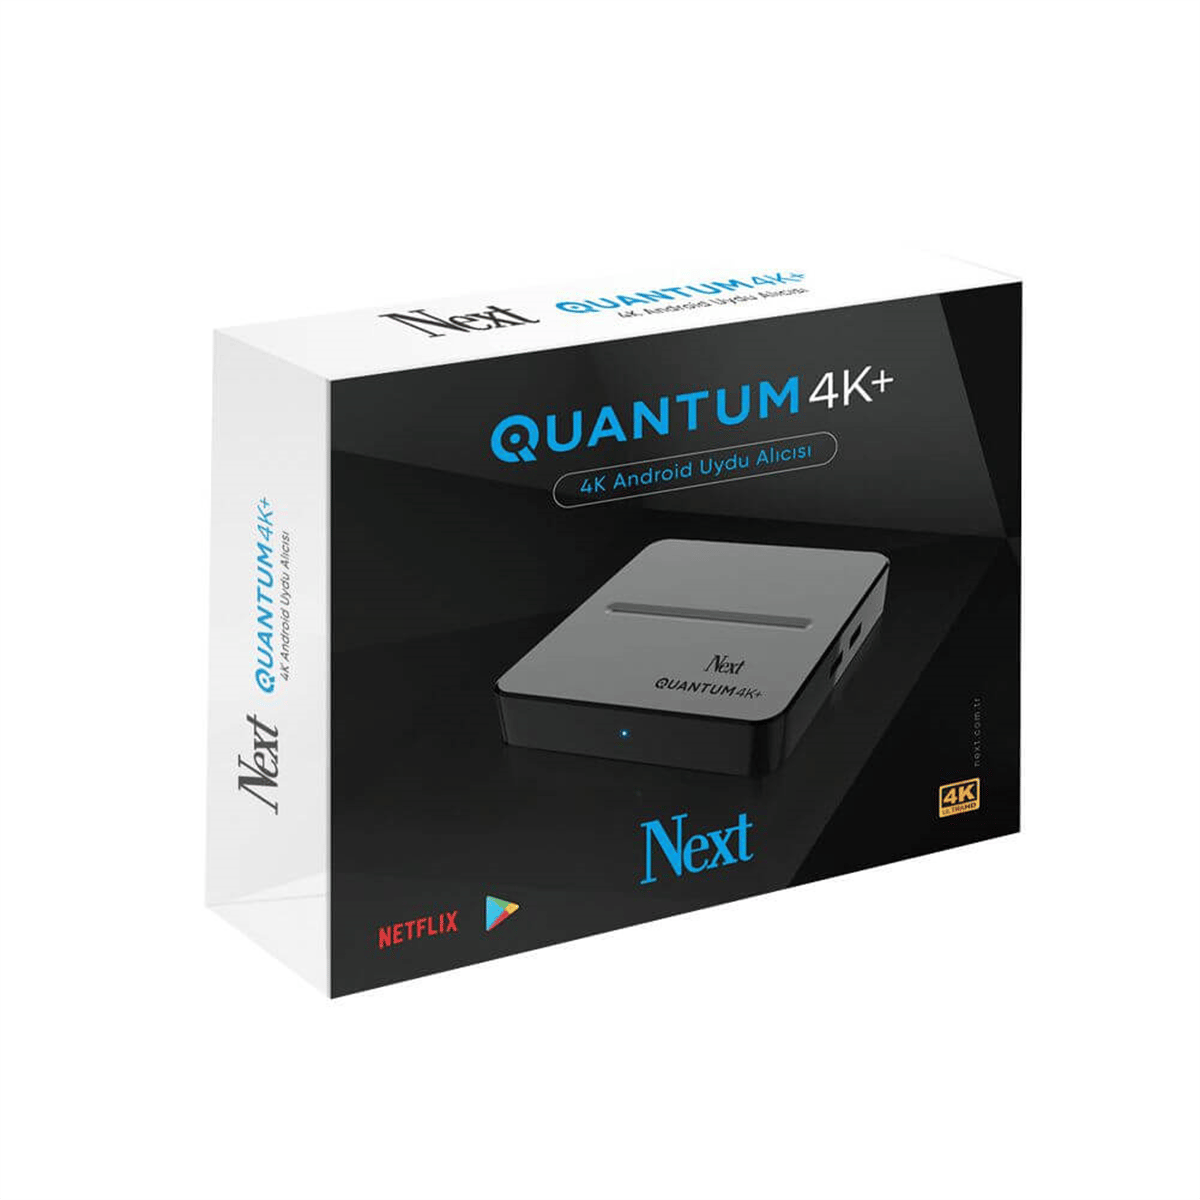 Next Quantum 4K+ Android Uydu Alıcısı + Air Mouse Hediyeli